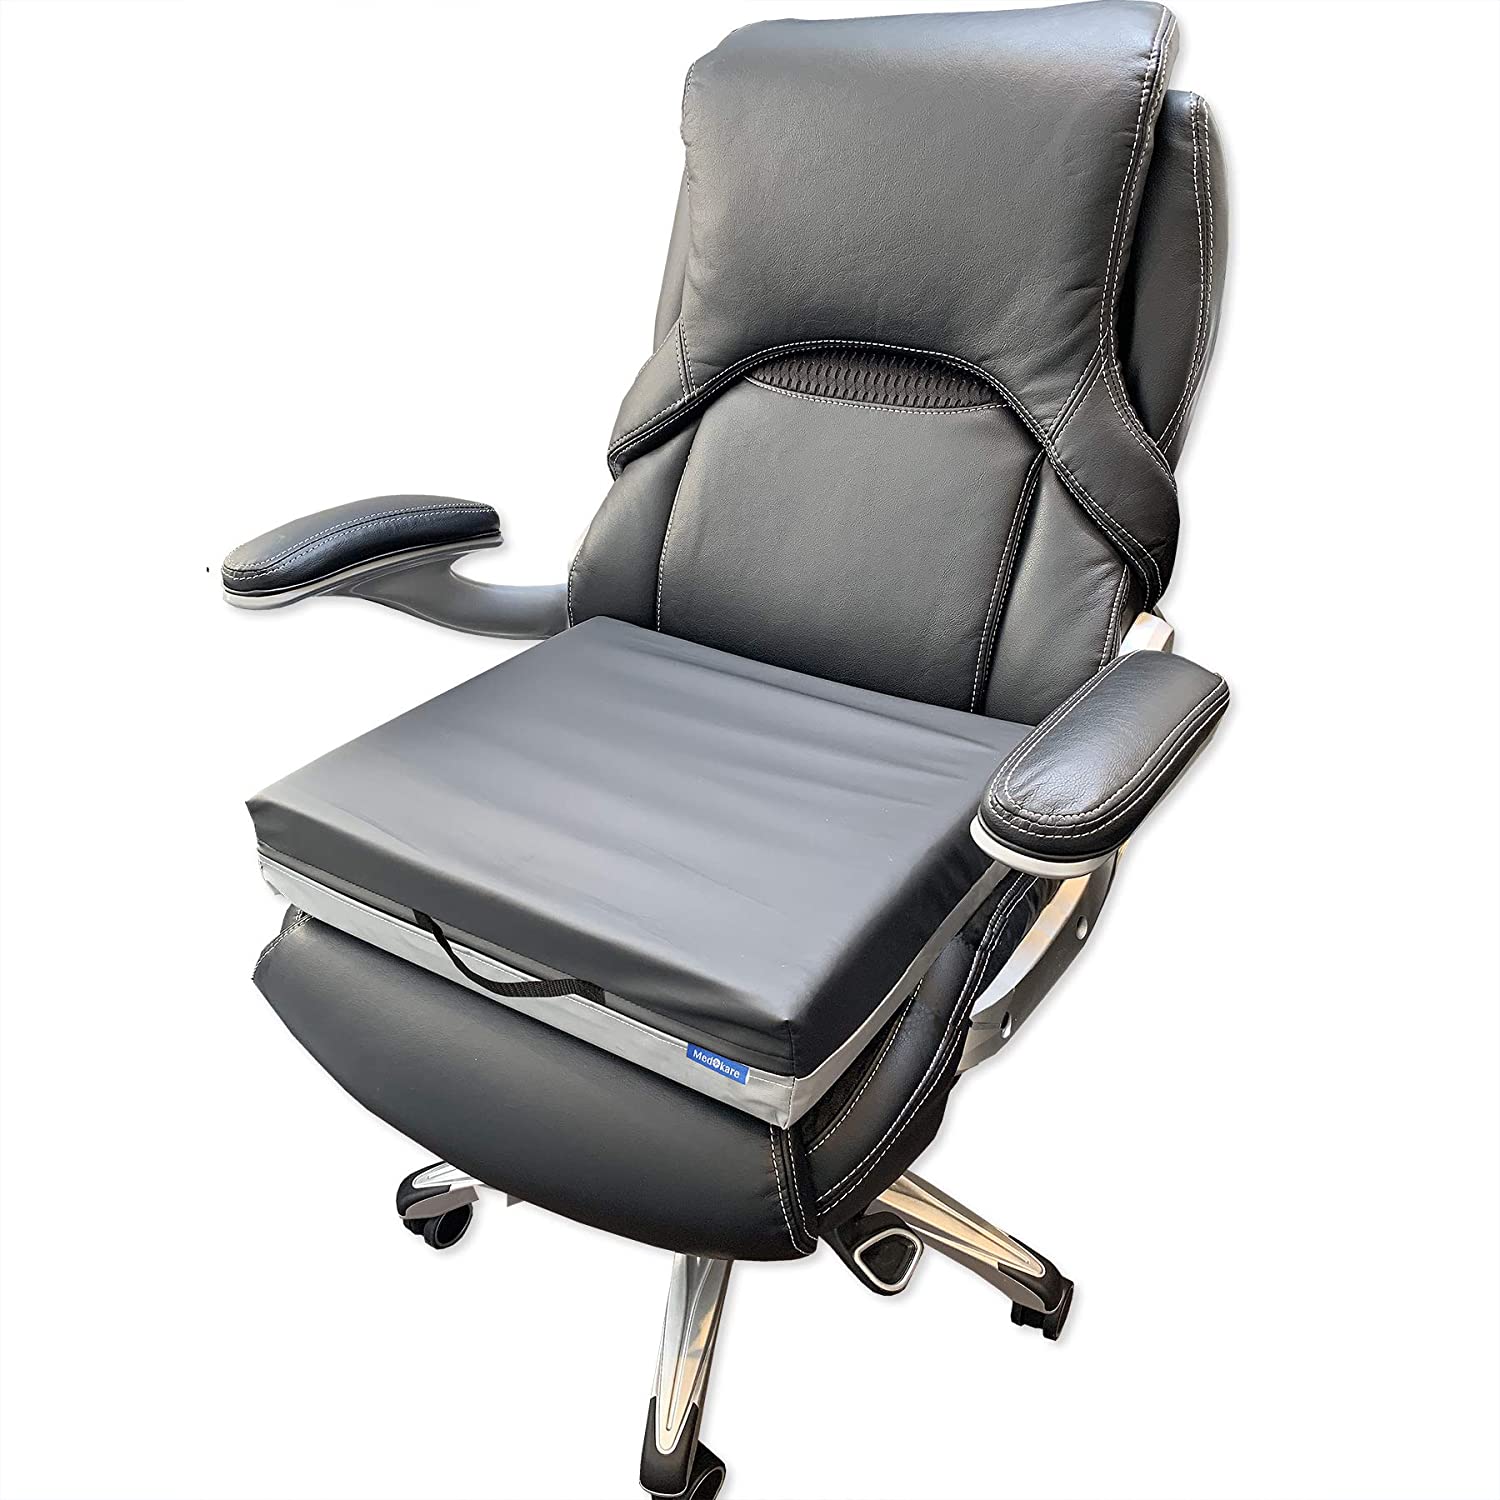 medokare pressure relief seat cushion  comfortable car seat